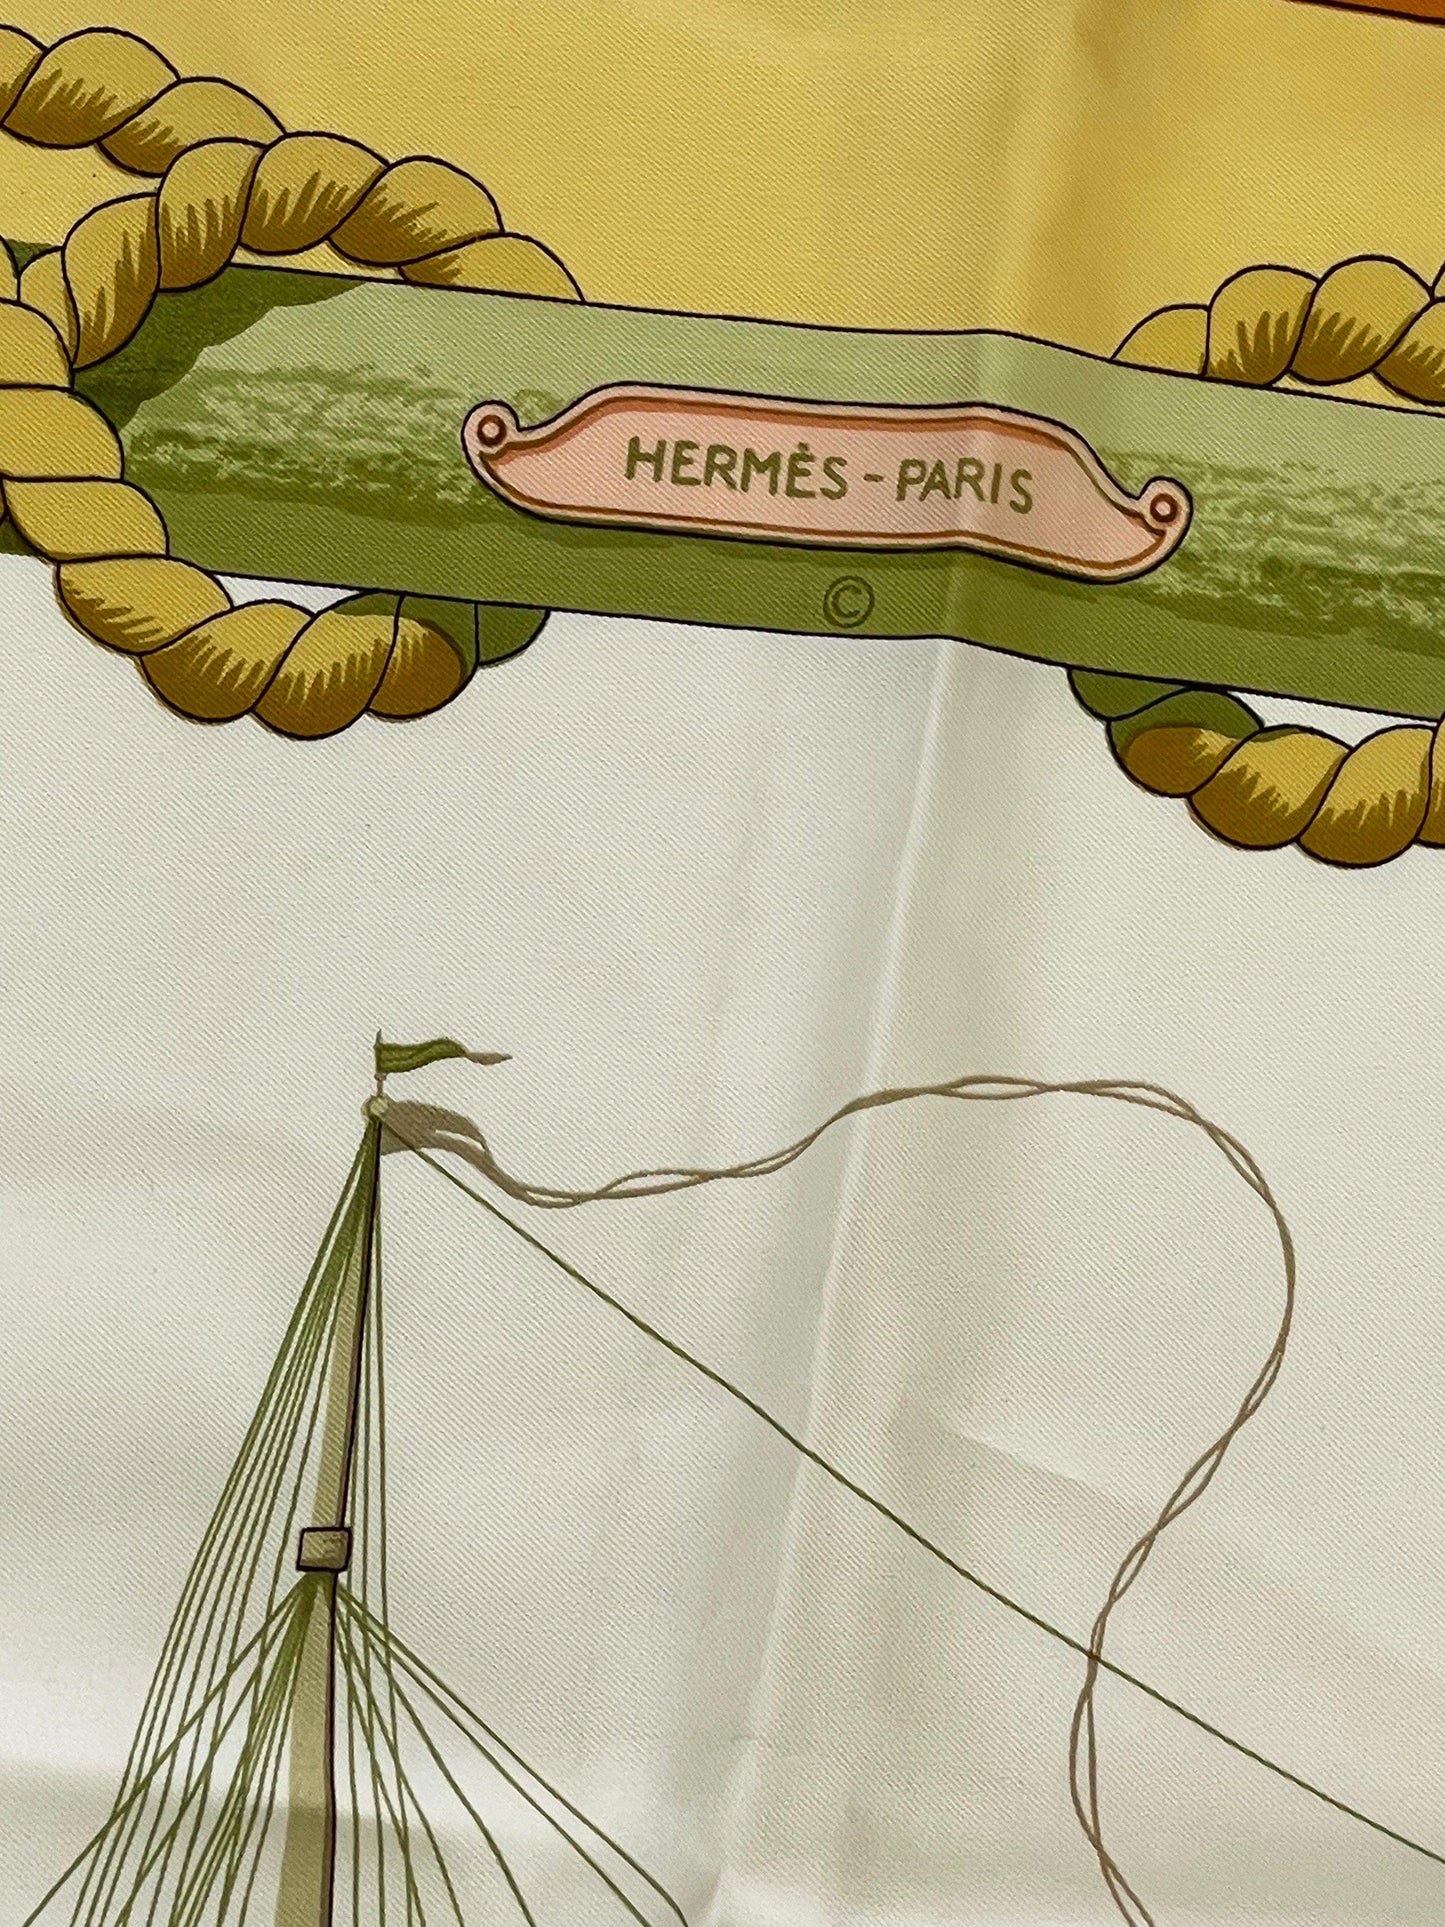 Hermes "Tribord" - Second Nature Boutique